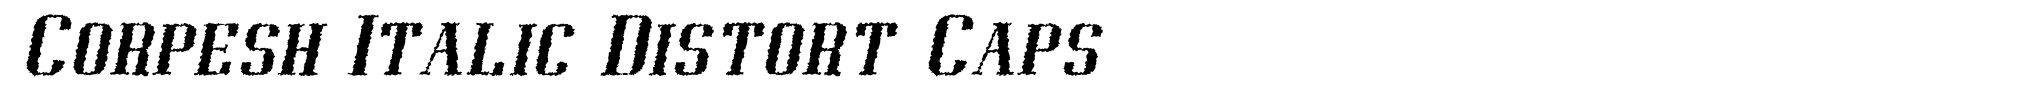 Corpesh Italic Distort Caps image